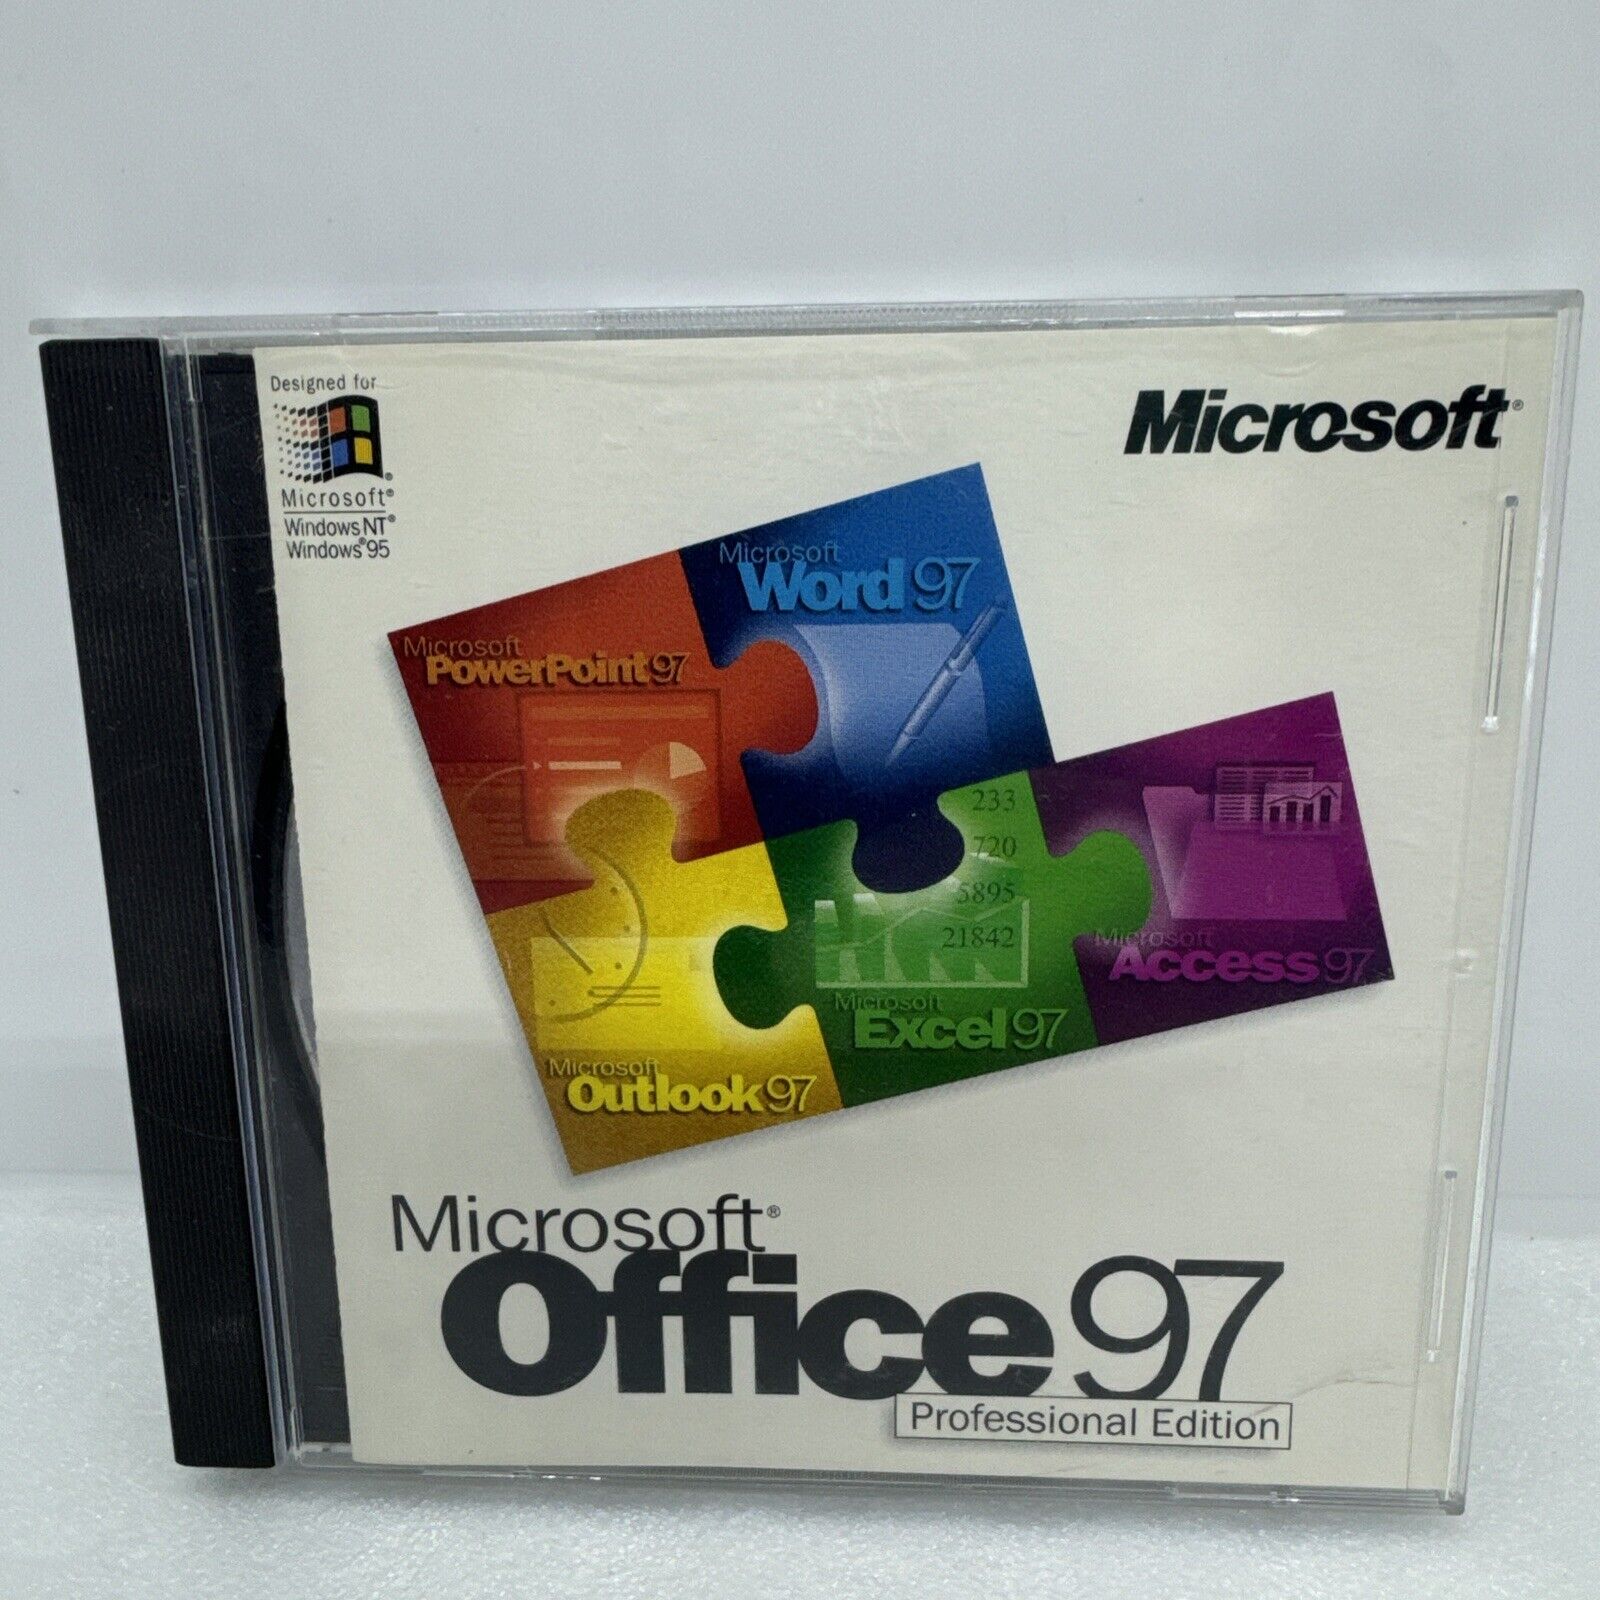 Microsoft Office 97 Professional Edition CD w/ Product Key